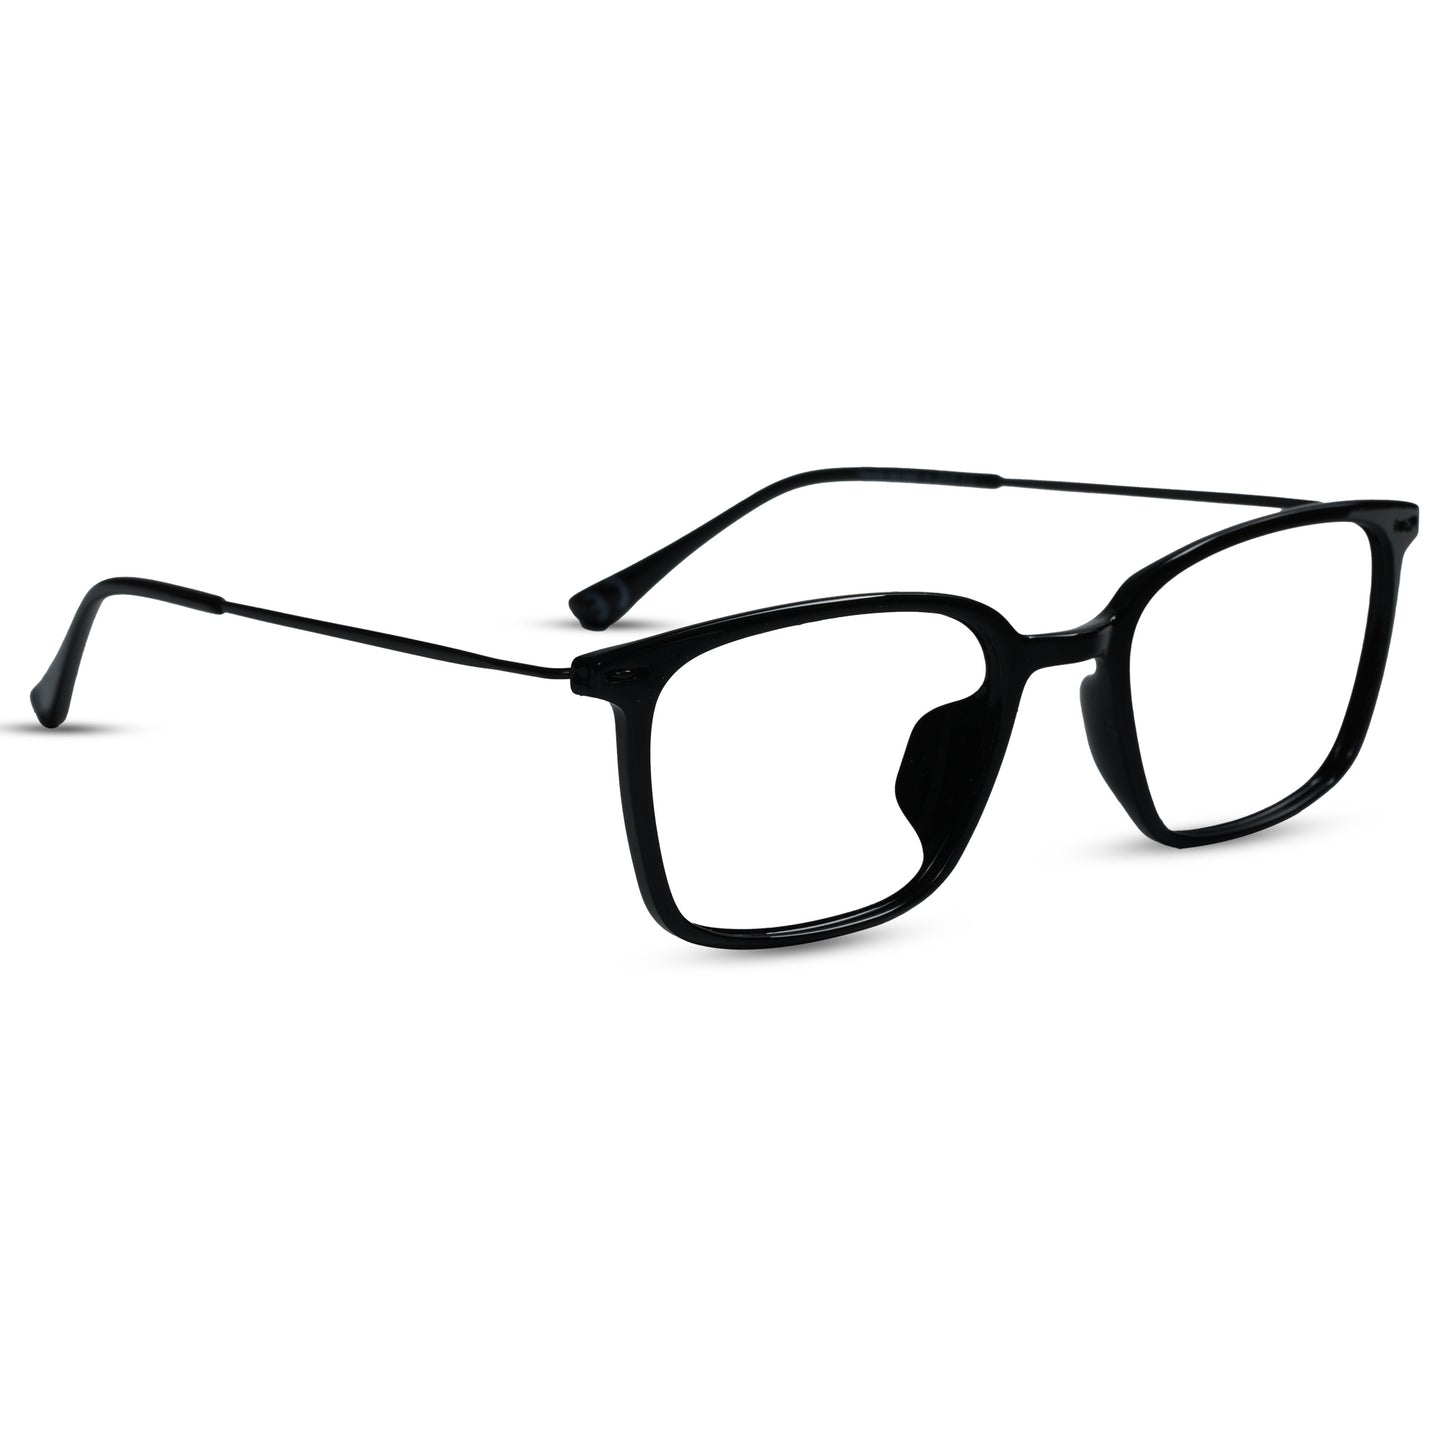 2.5 NVG Computer Glasses Black Square Eyeglasses